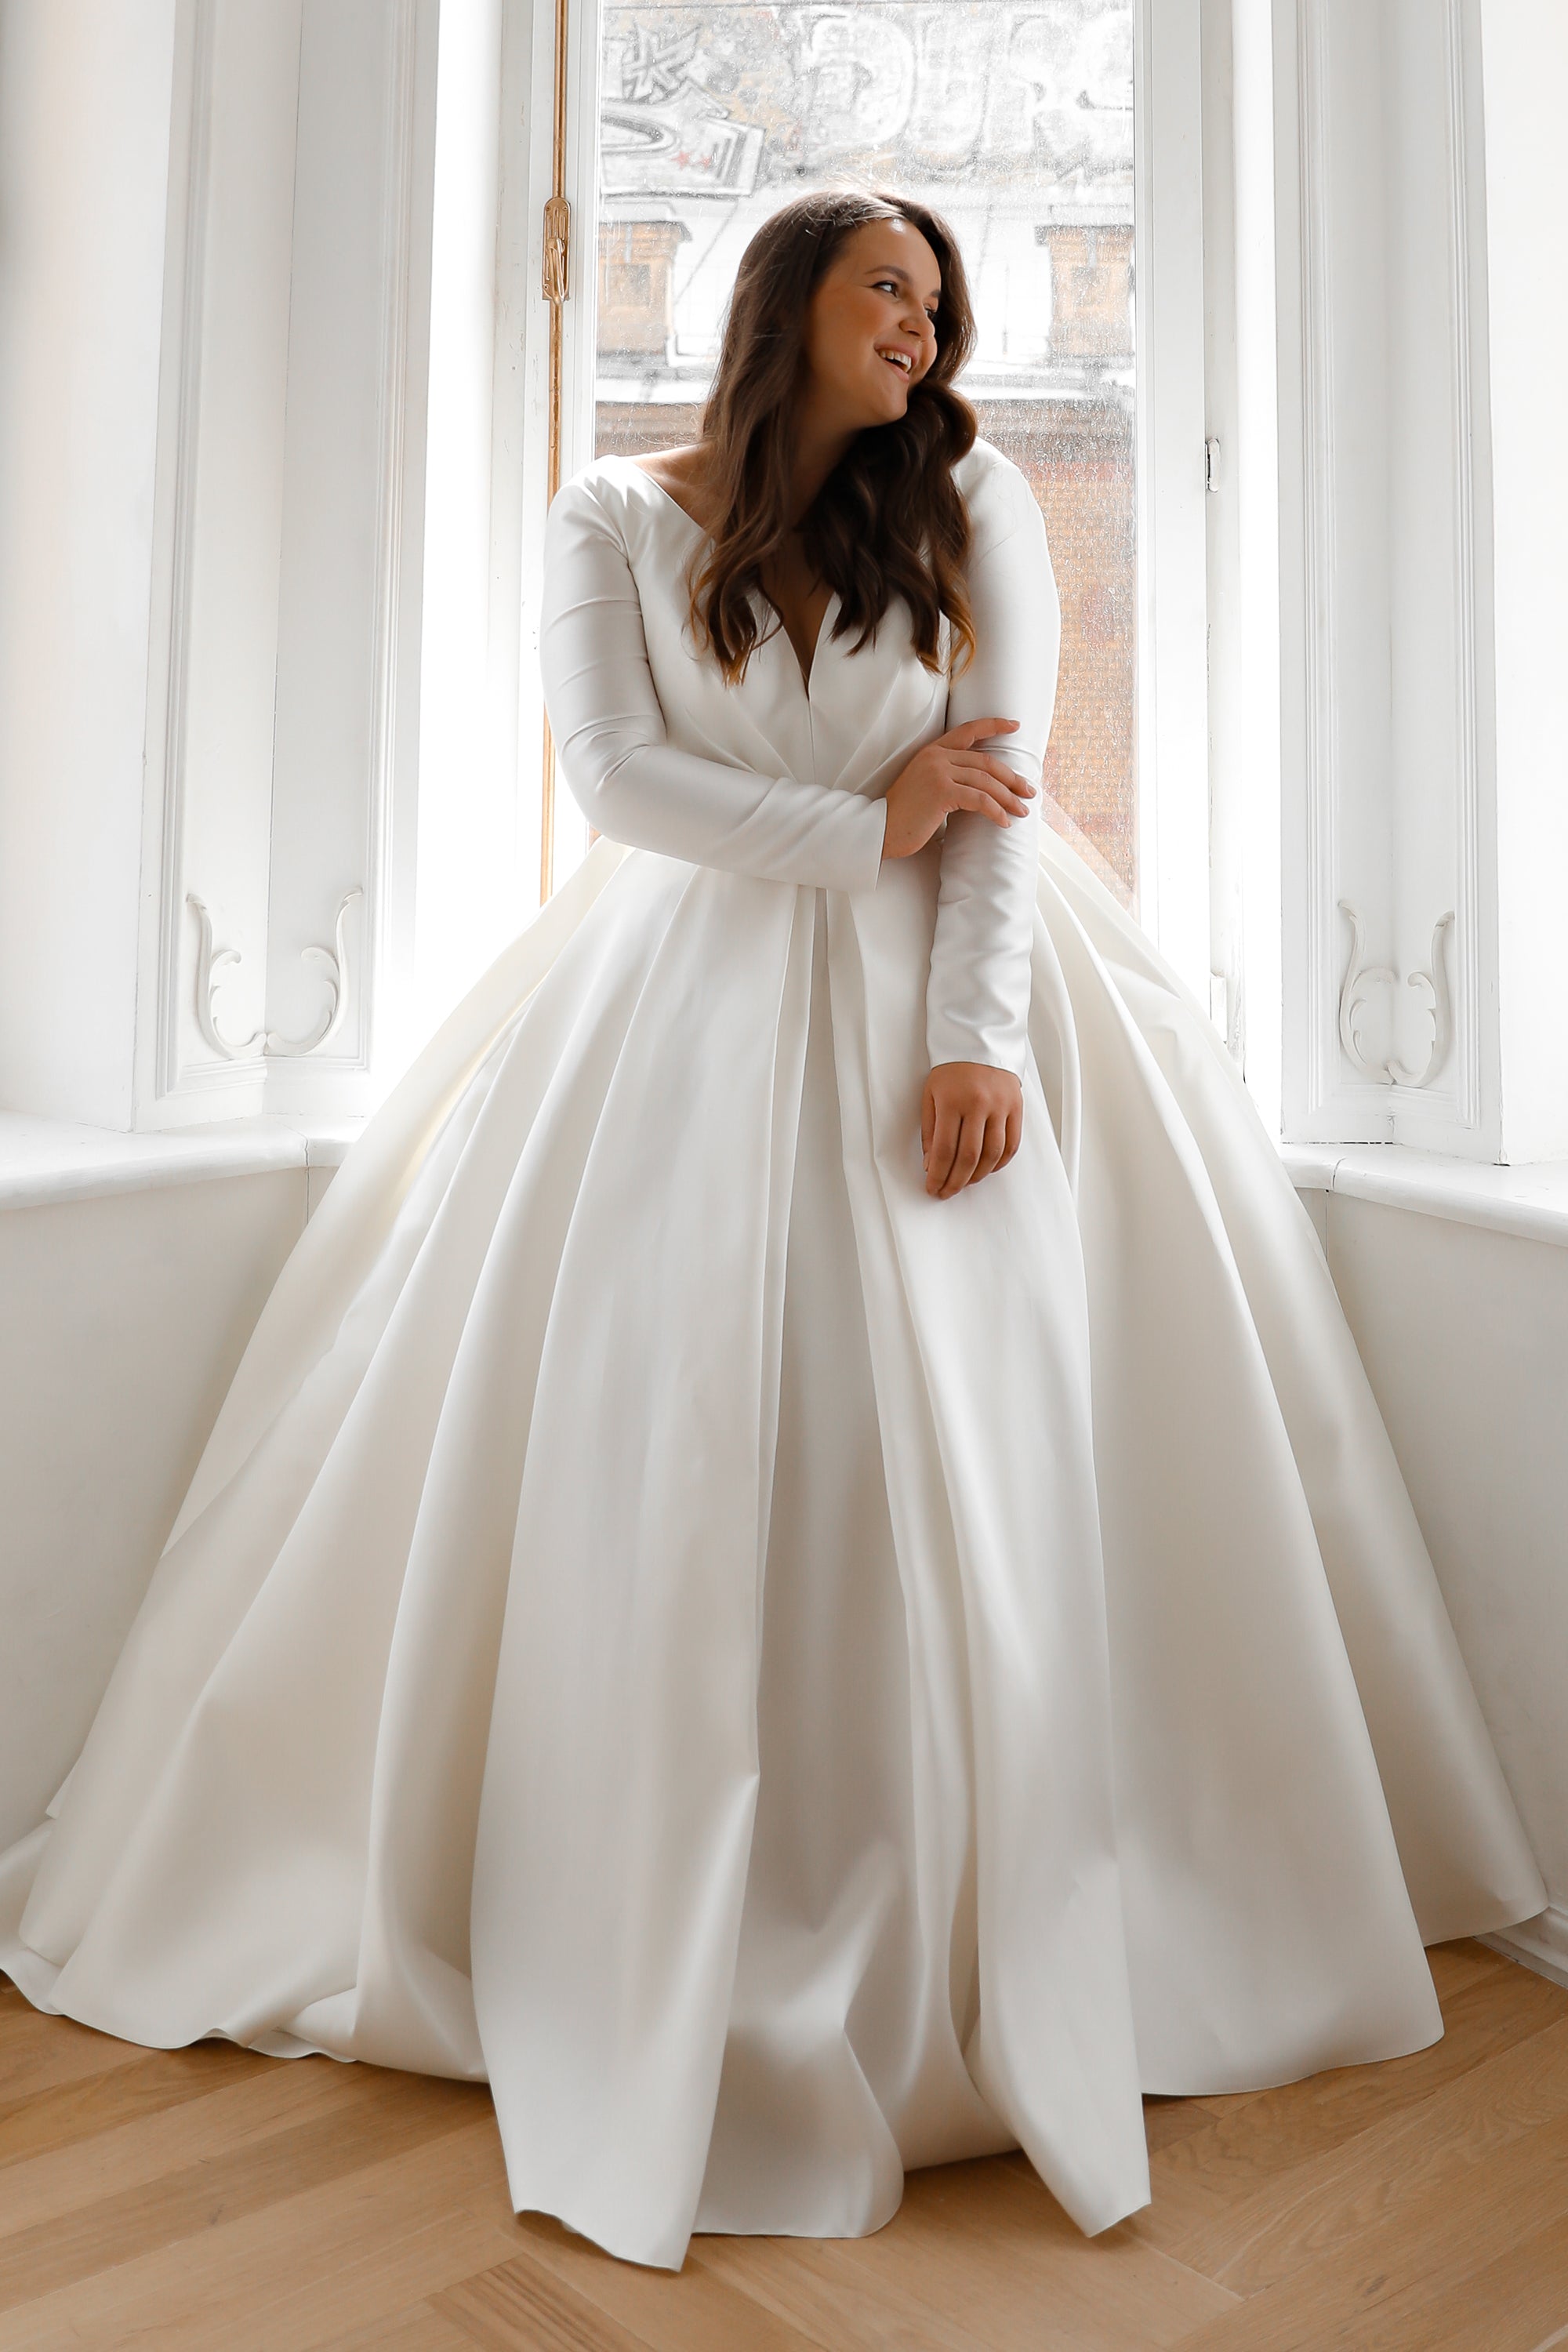 The Complete Wedding Dresses Guide for Short Brides - Petite Dressing